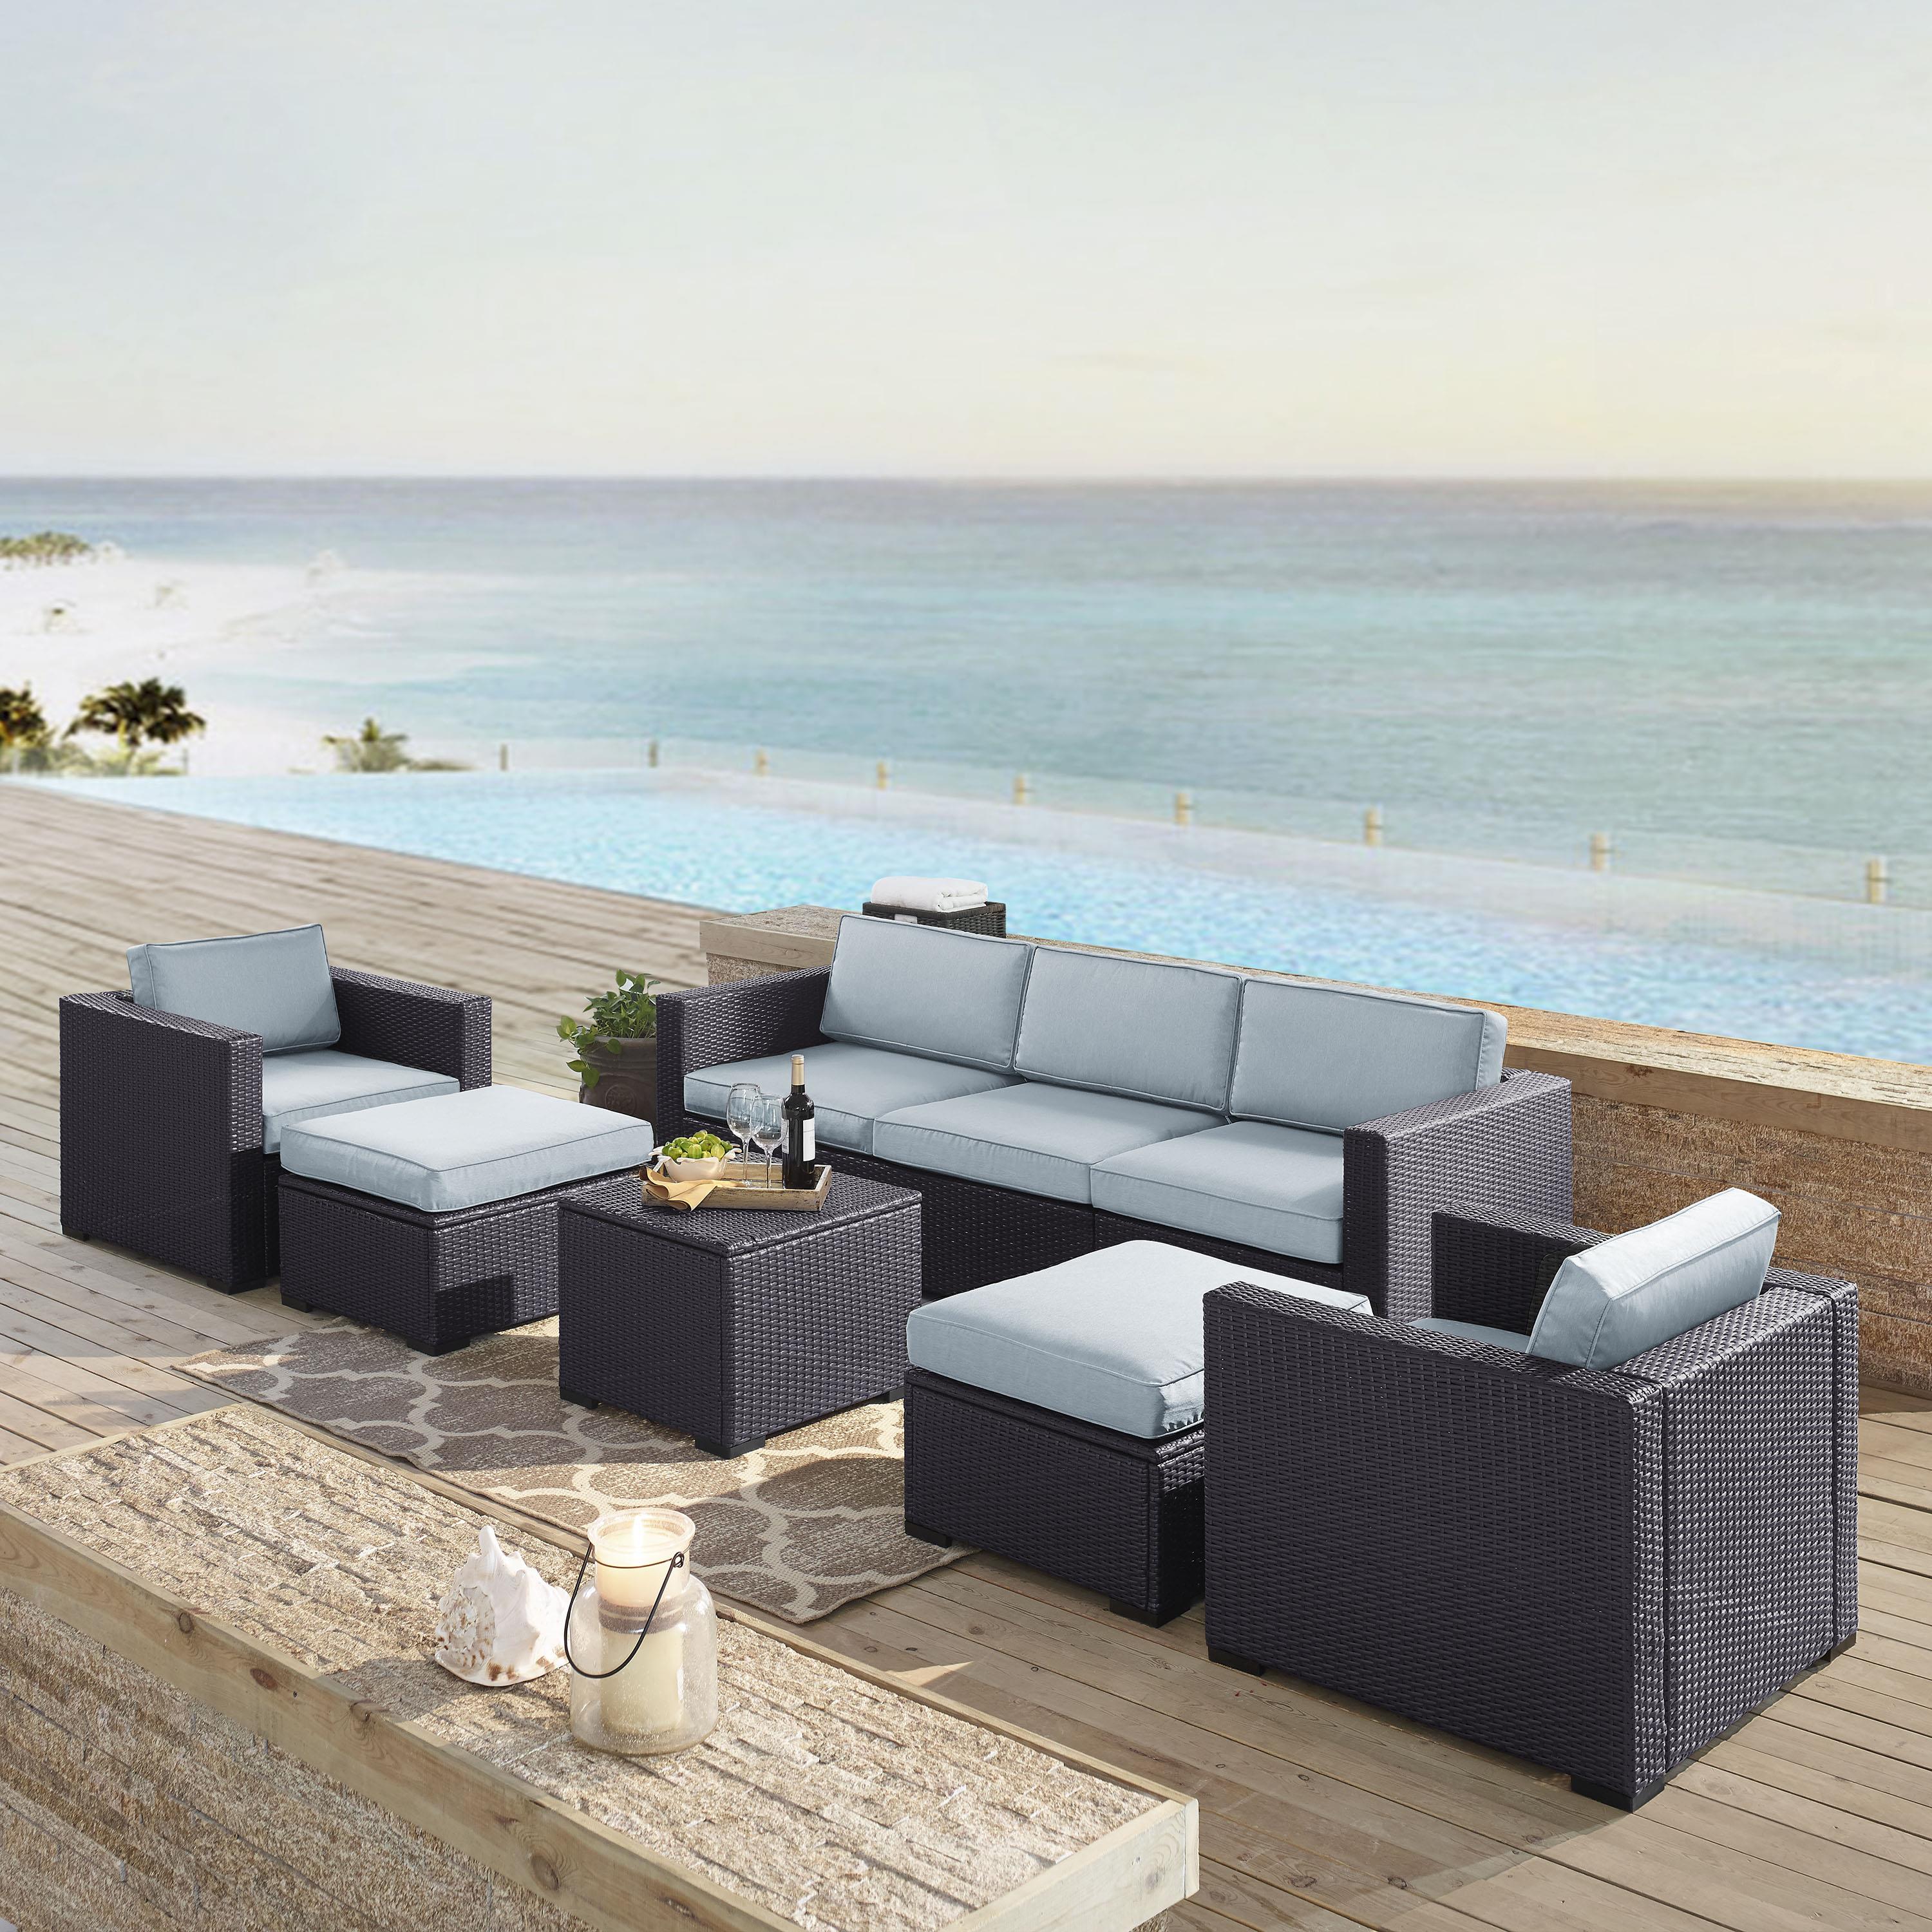 Crosley Furniture Biscayne 7 Piece Metal Patio Sofa Set in Brown/Blue - image 4 of 4